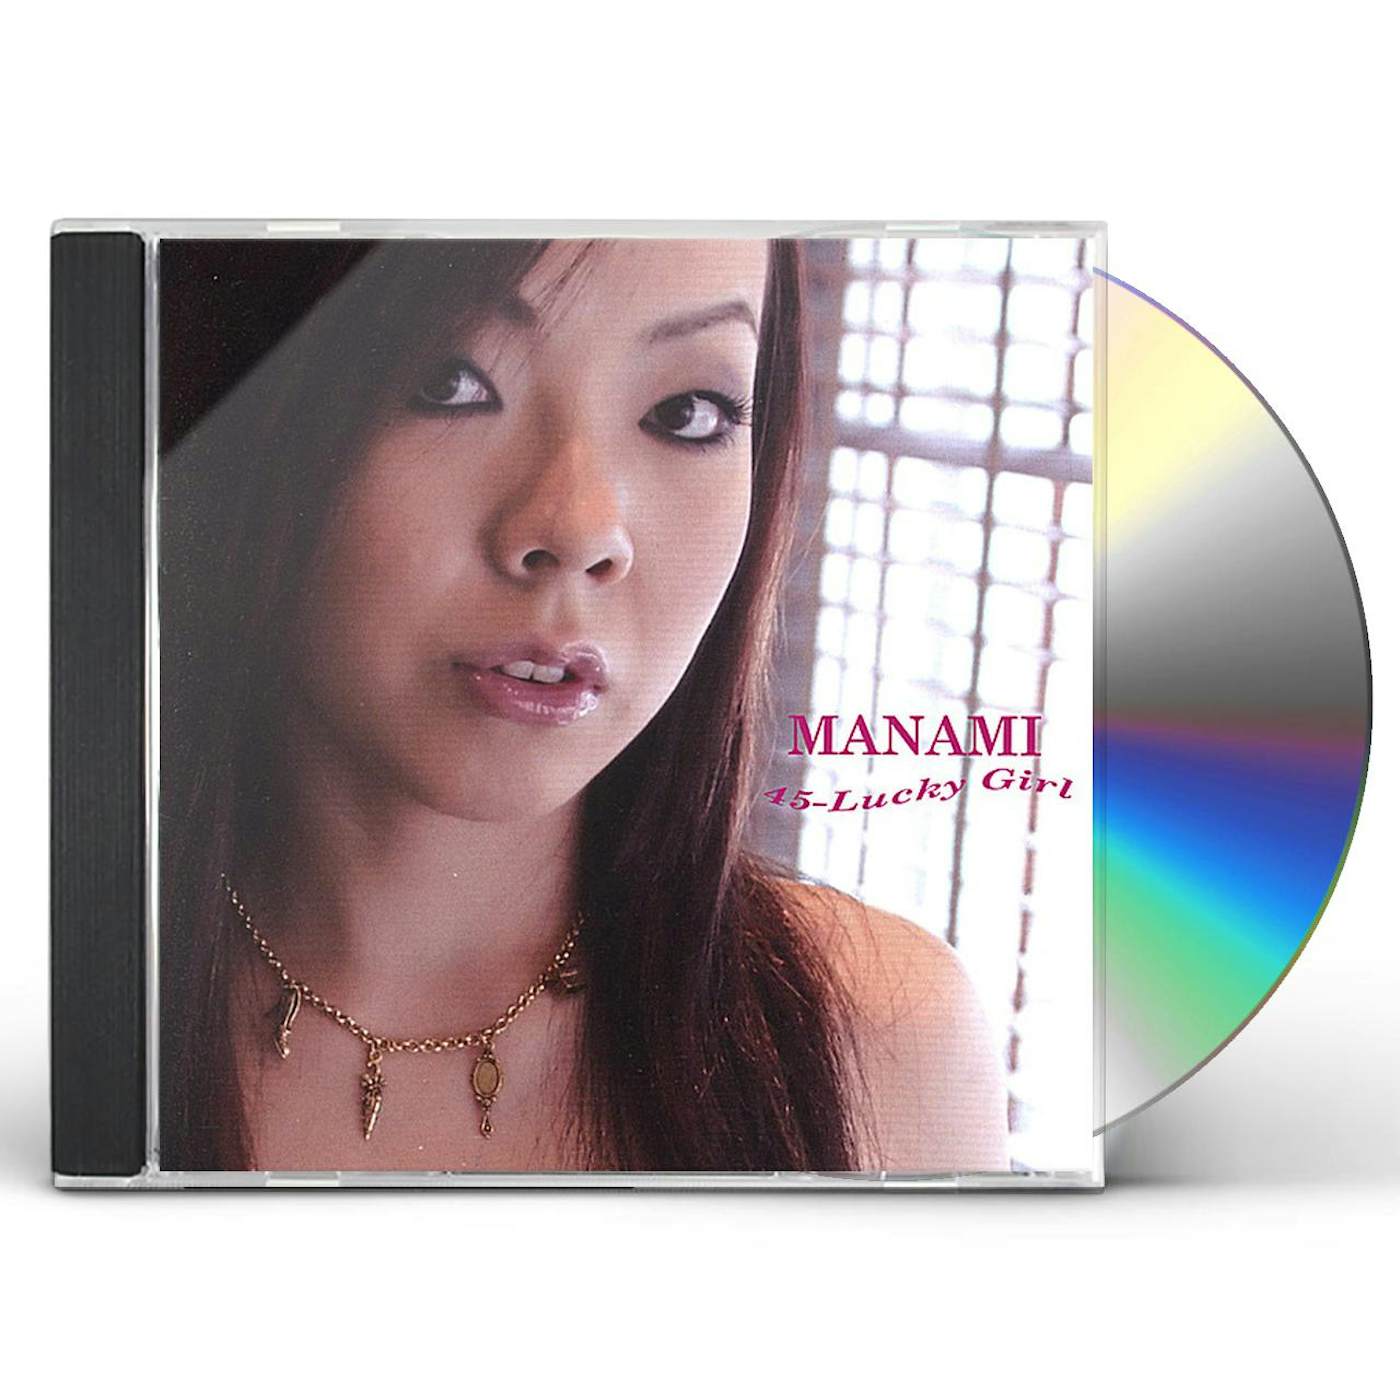 Manami 45-LUCKY GIRL CD